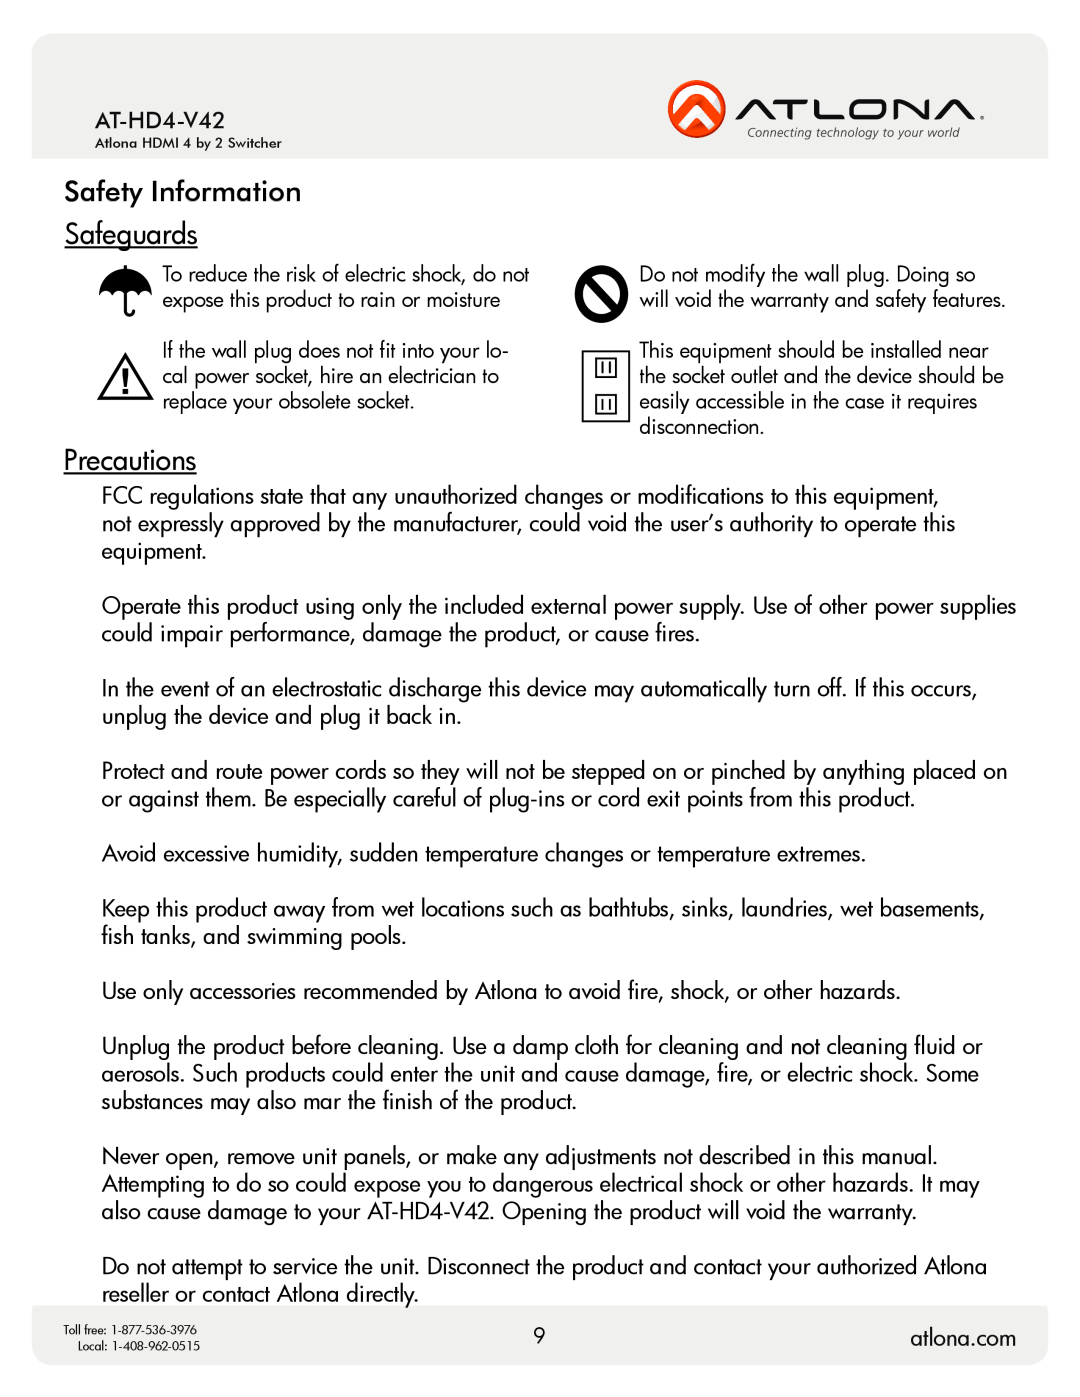 Atlona AT-HD4-V42 user manual Safety Information Safeguards, Precautions, atlona.com 